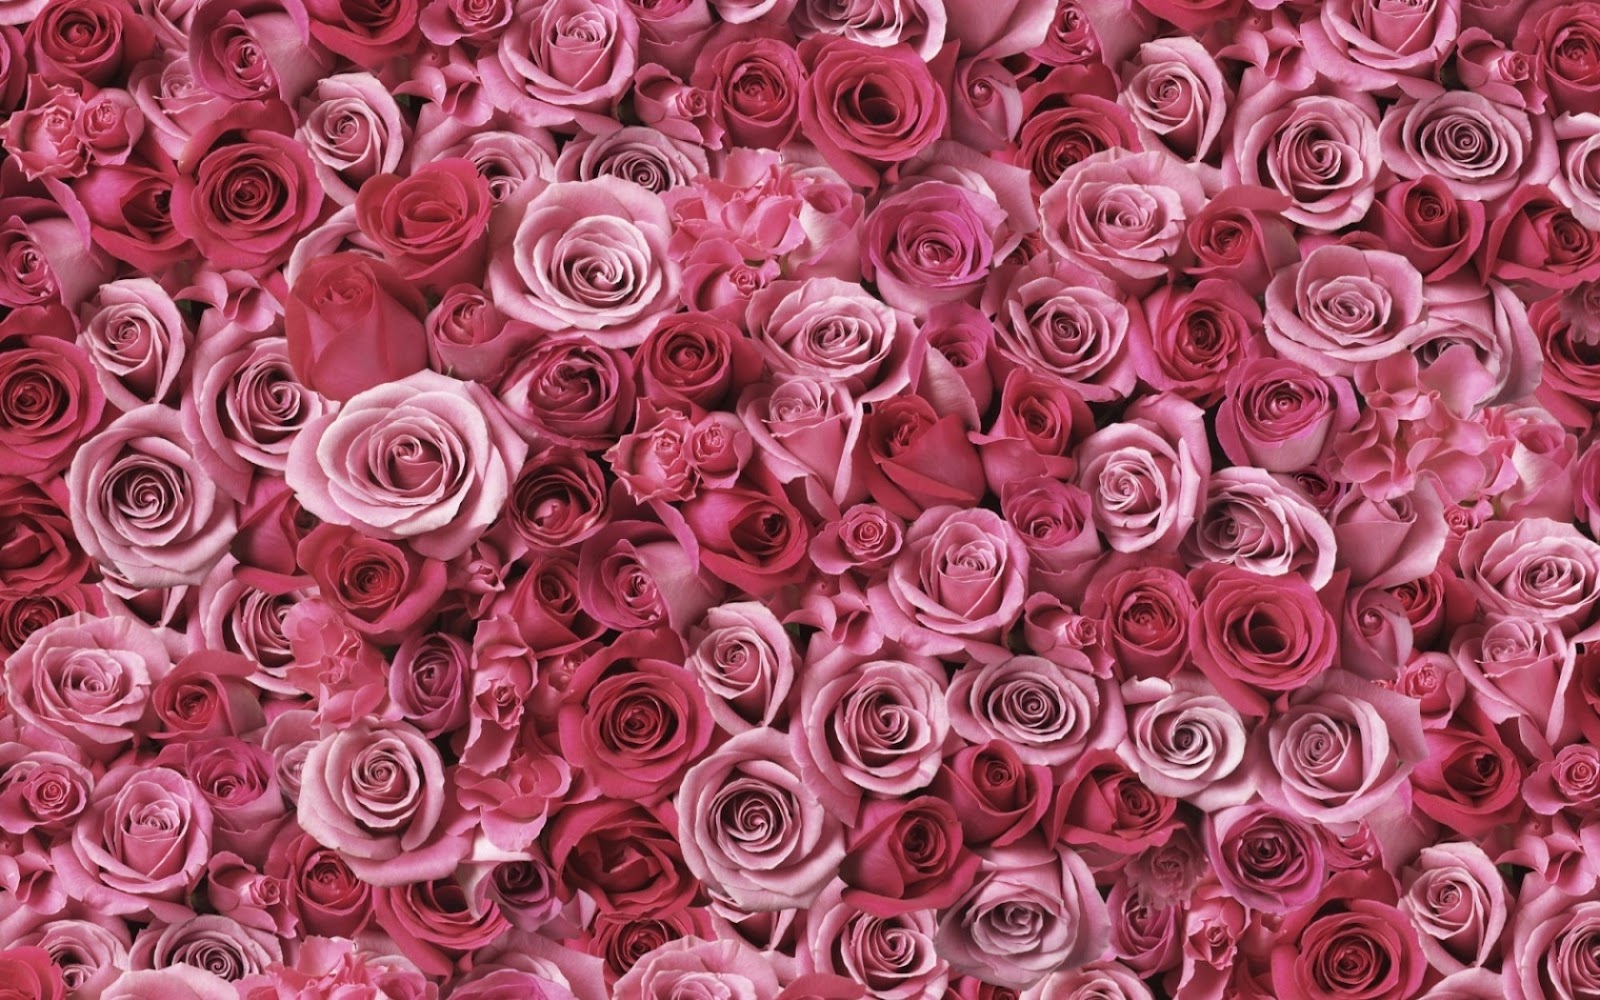 Tones Of Pink HD Roses Wallpaper Nature